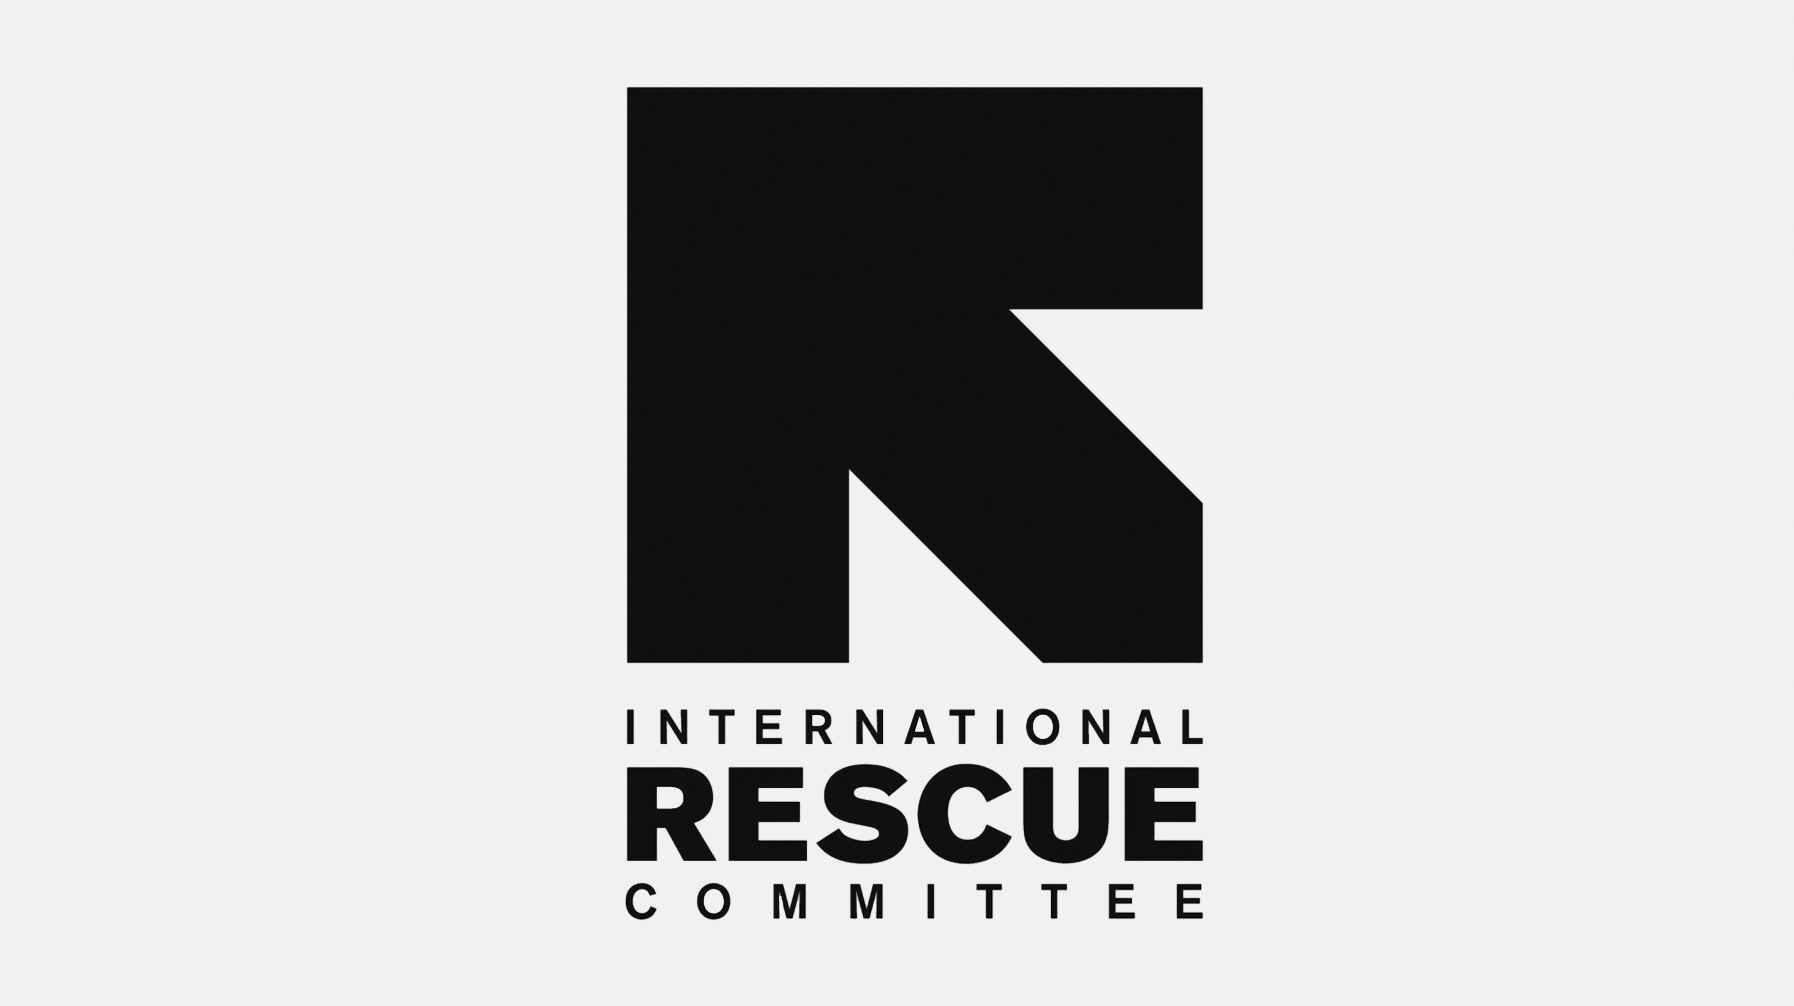 International Rescue Committee logo.